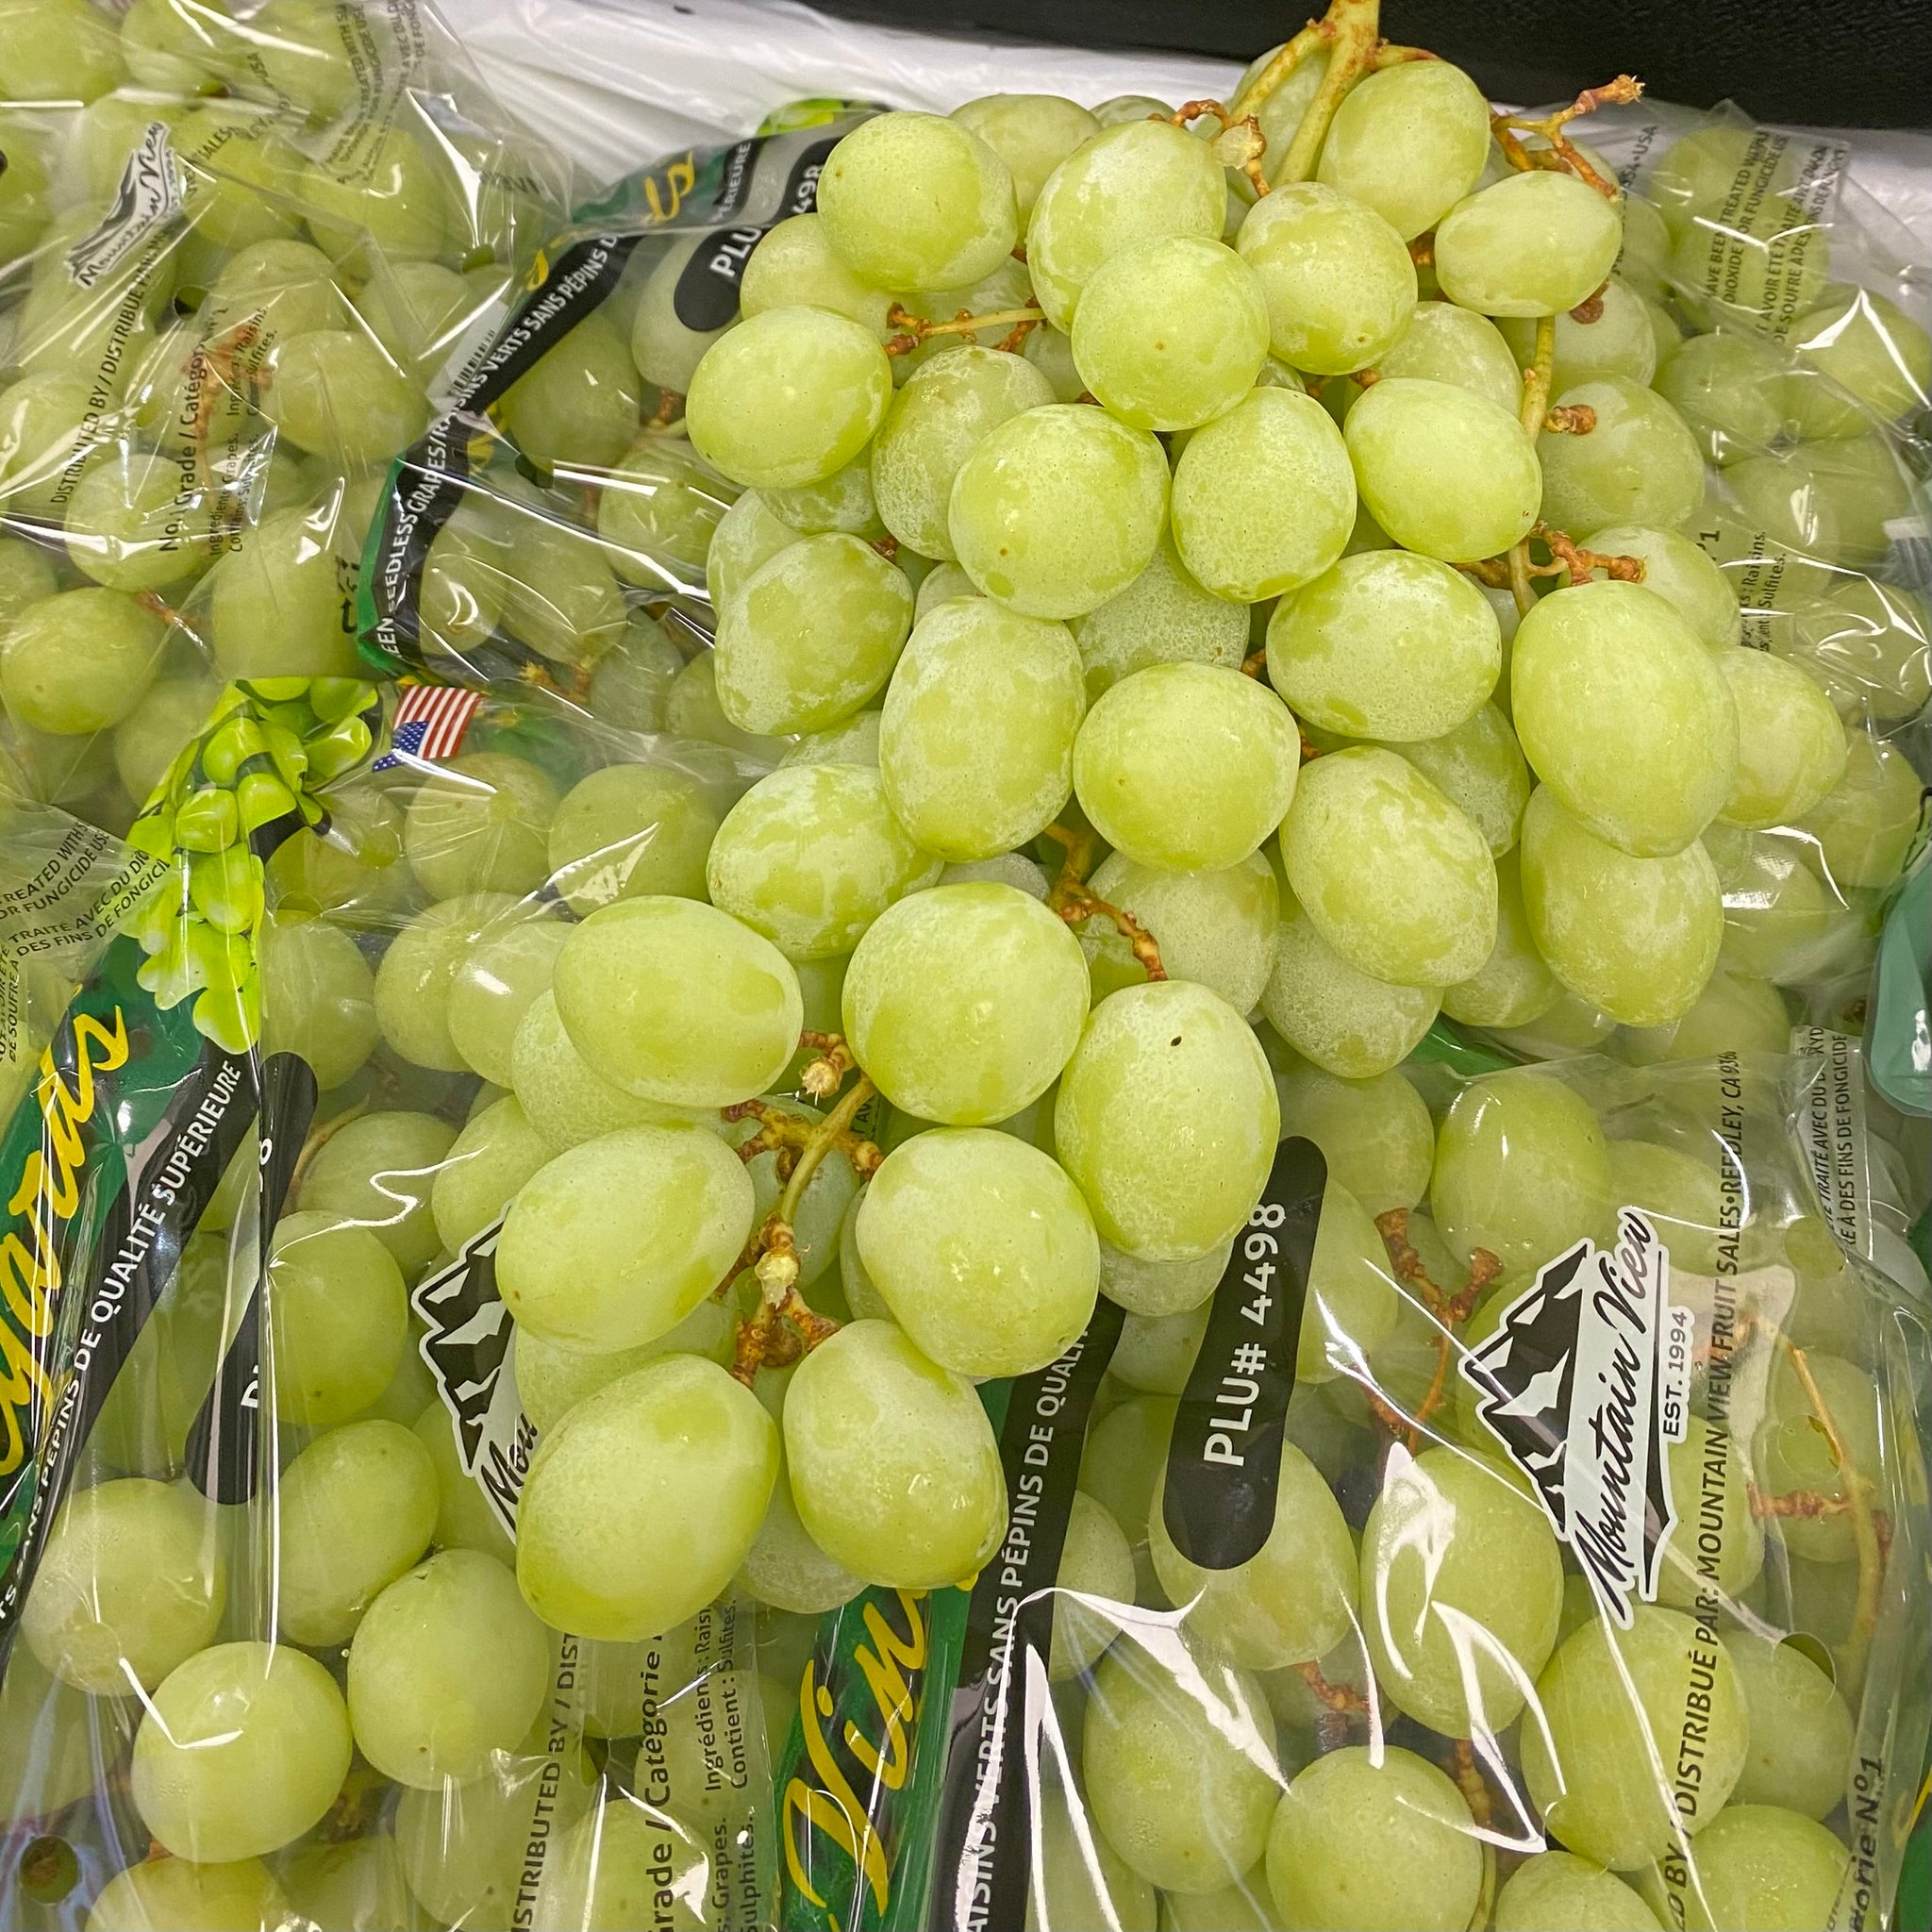 Green Seedless Grapes - NSHF